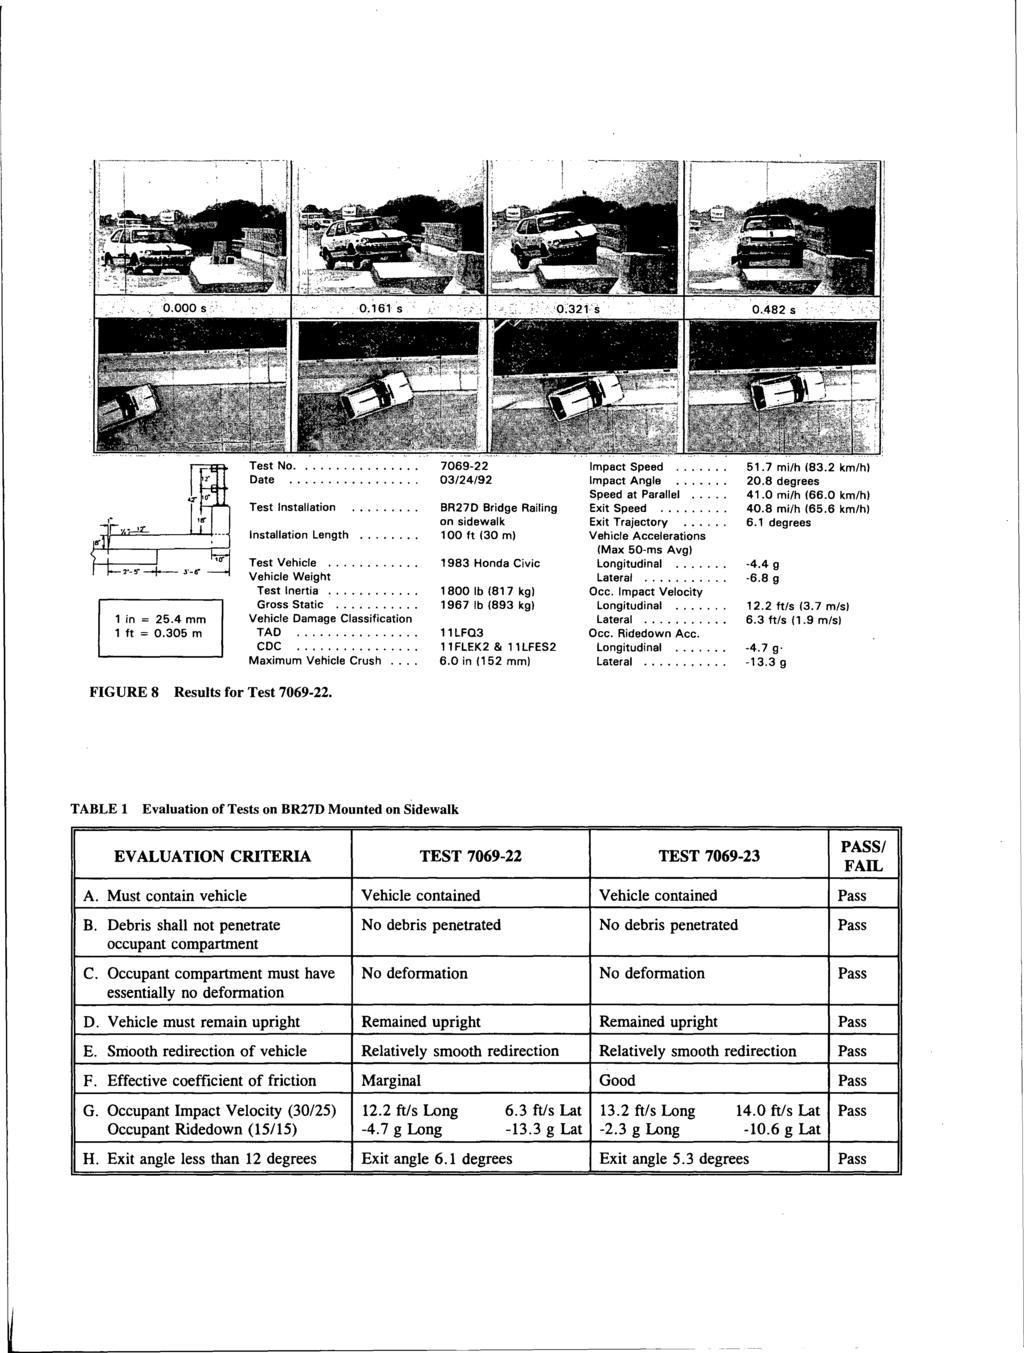 1 in = 25.4 mm 1 ft = 0.305 m Date.... TAD.... BR27D Bridge Railing on sidewalk 100 ft (30 m) 1983 Honda Civic 1800 lb (817 kg) 1967 lb (893 kg) 11 LFQ3 11FLEK2 & 11LFES2 6.0 in (152 mm) Impact Angle.